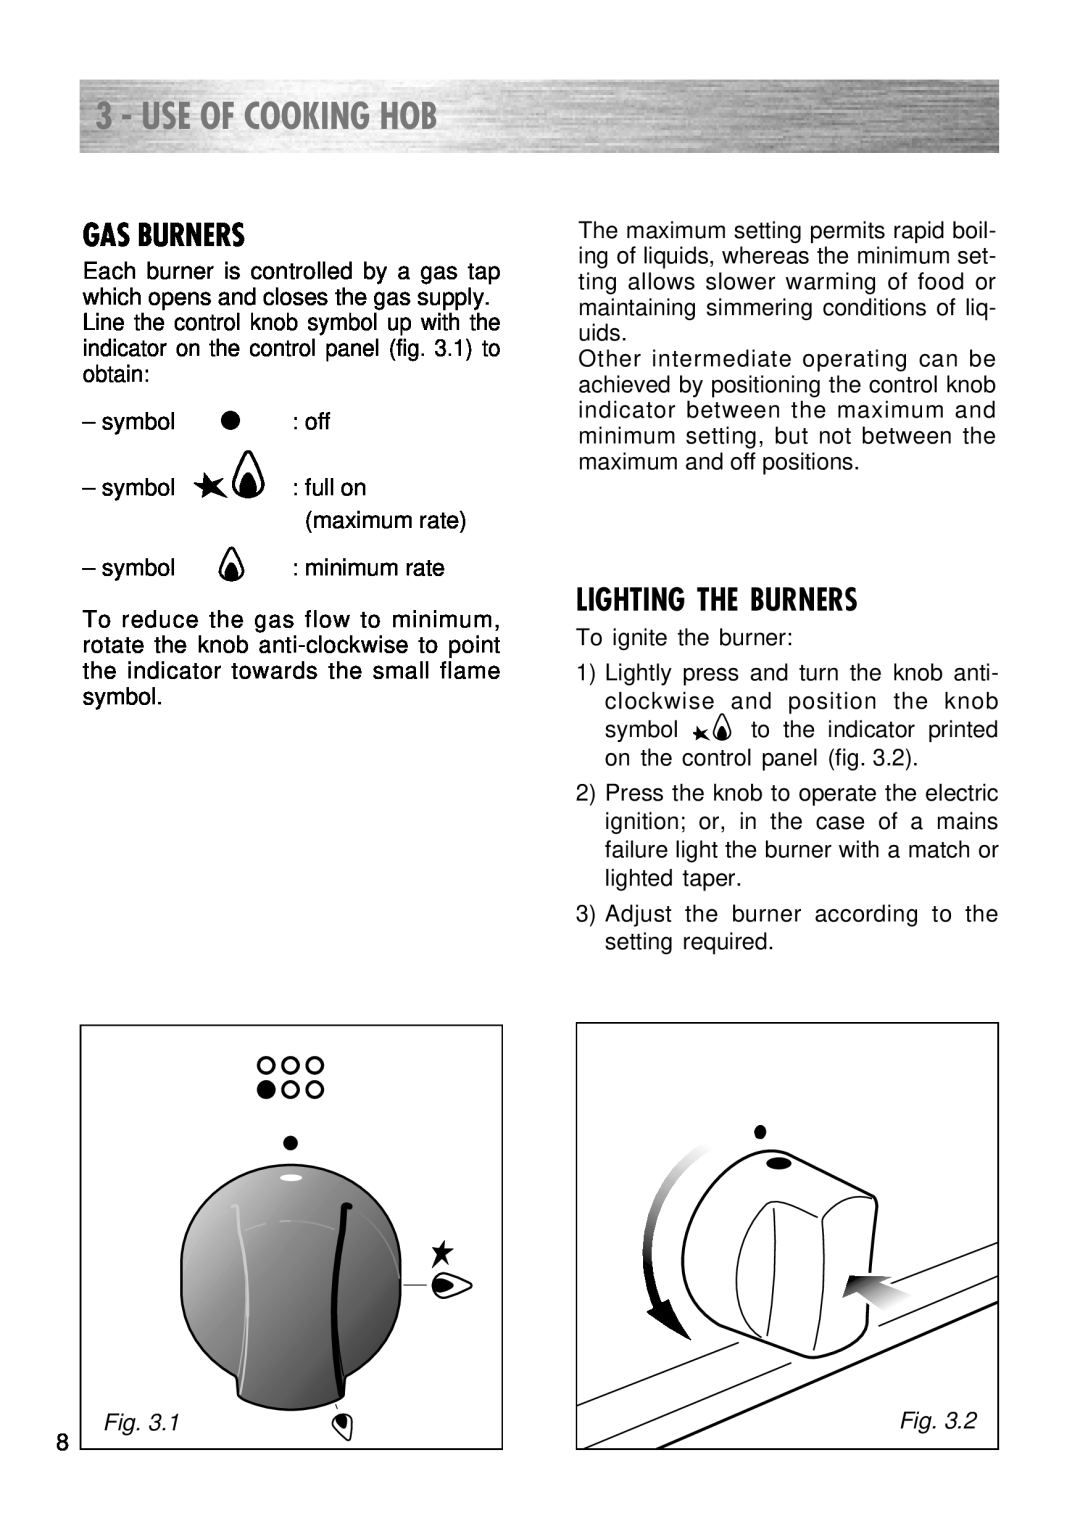 Kenwood CK 740 manual Use Of Cooking Hob, Gas Burners, Lighting The Burners 